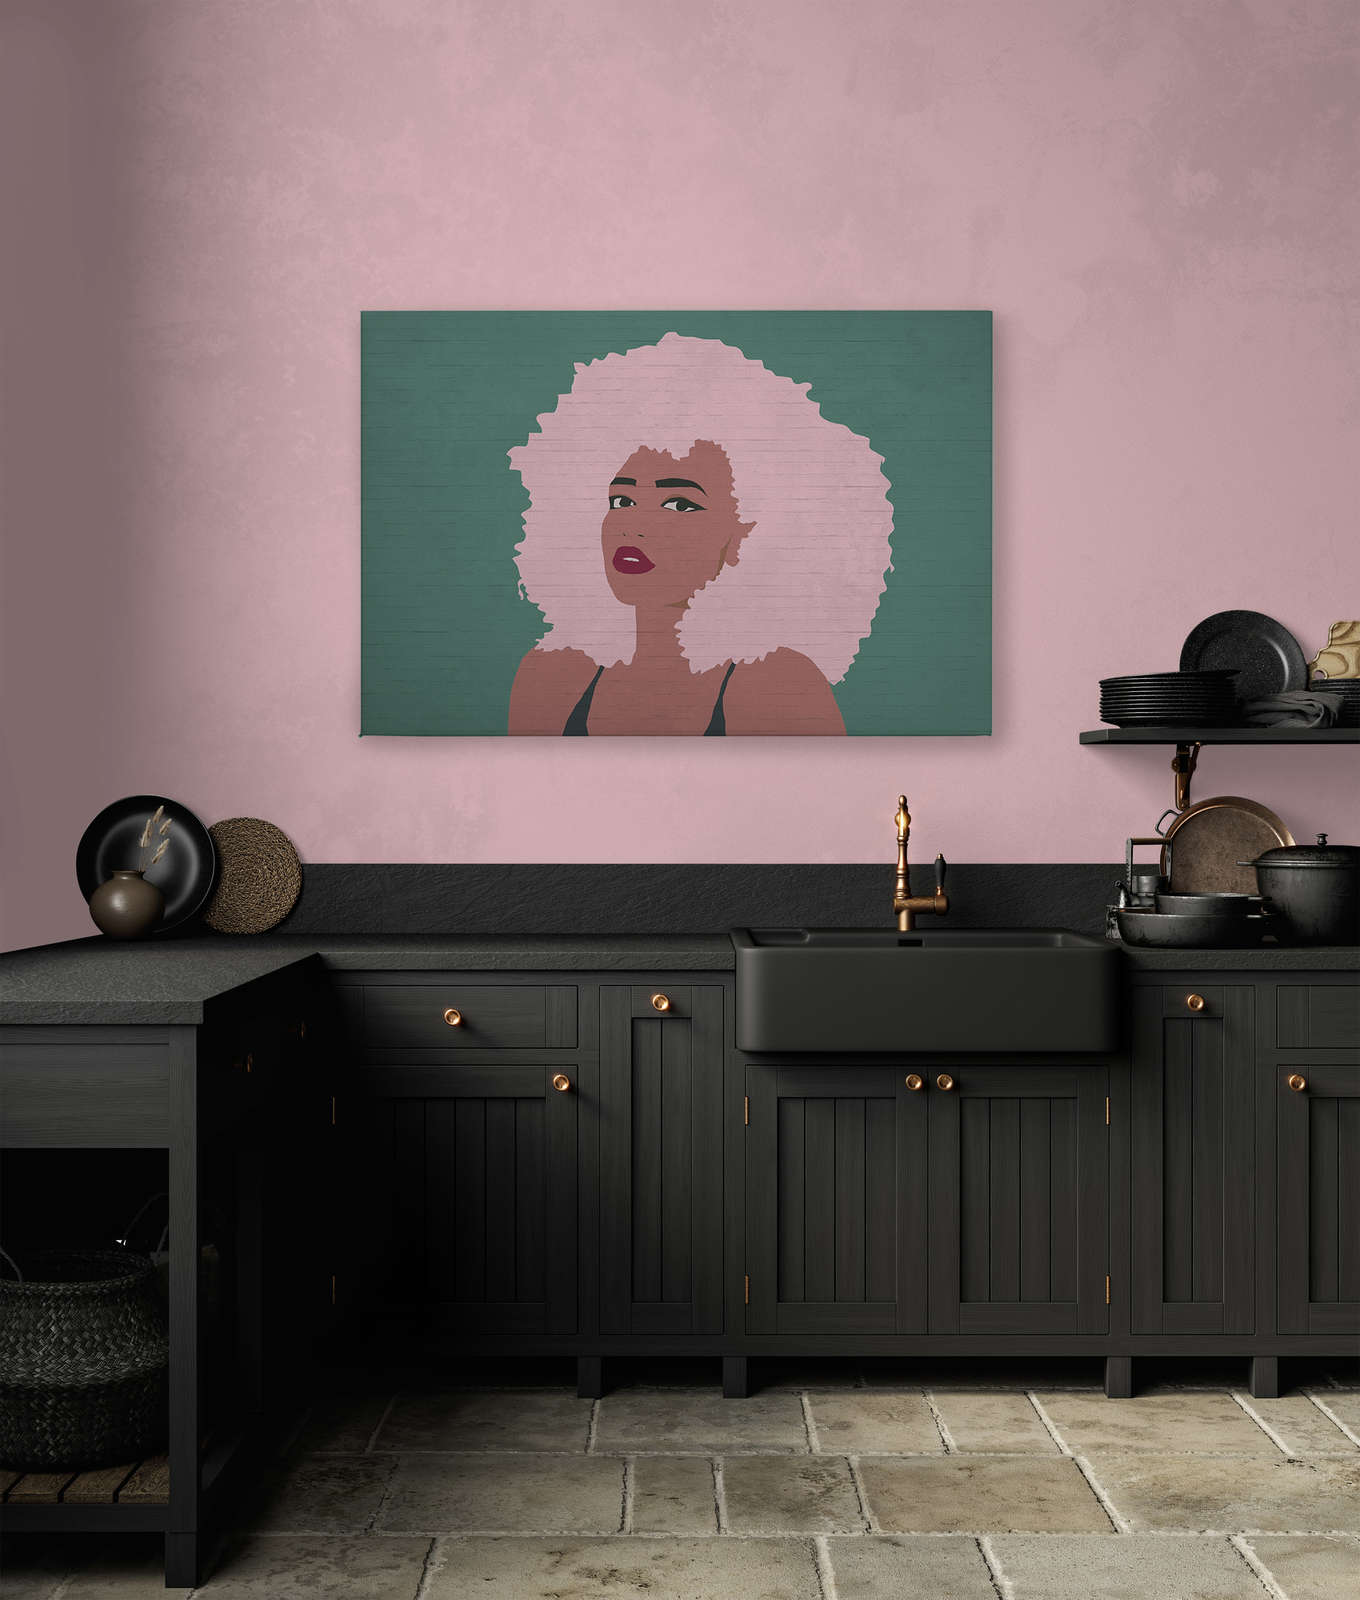             Canvas schilderij Whitney in Colour Block stijl - 1.20 m x 0.80 m
        